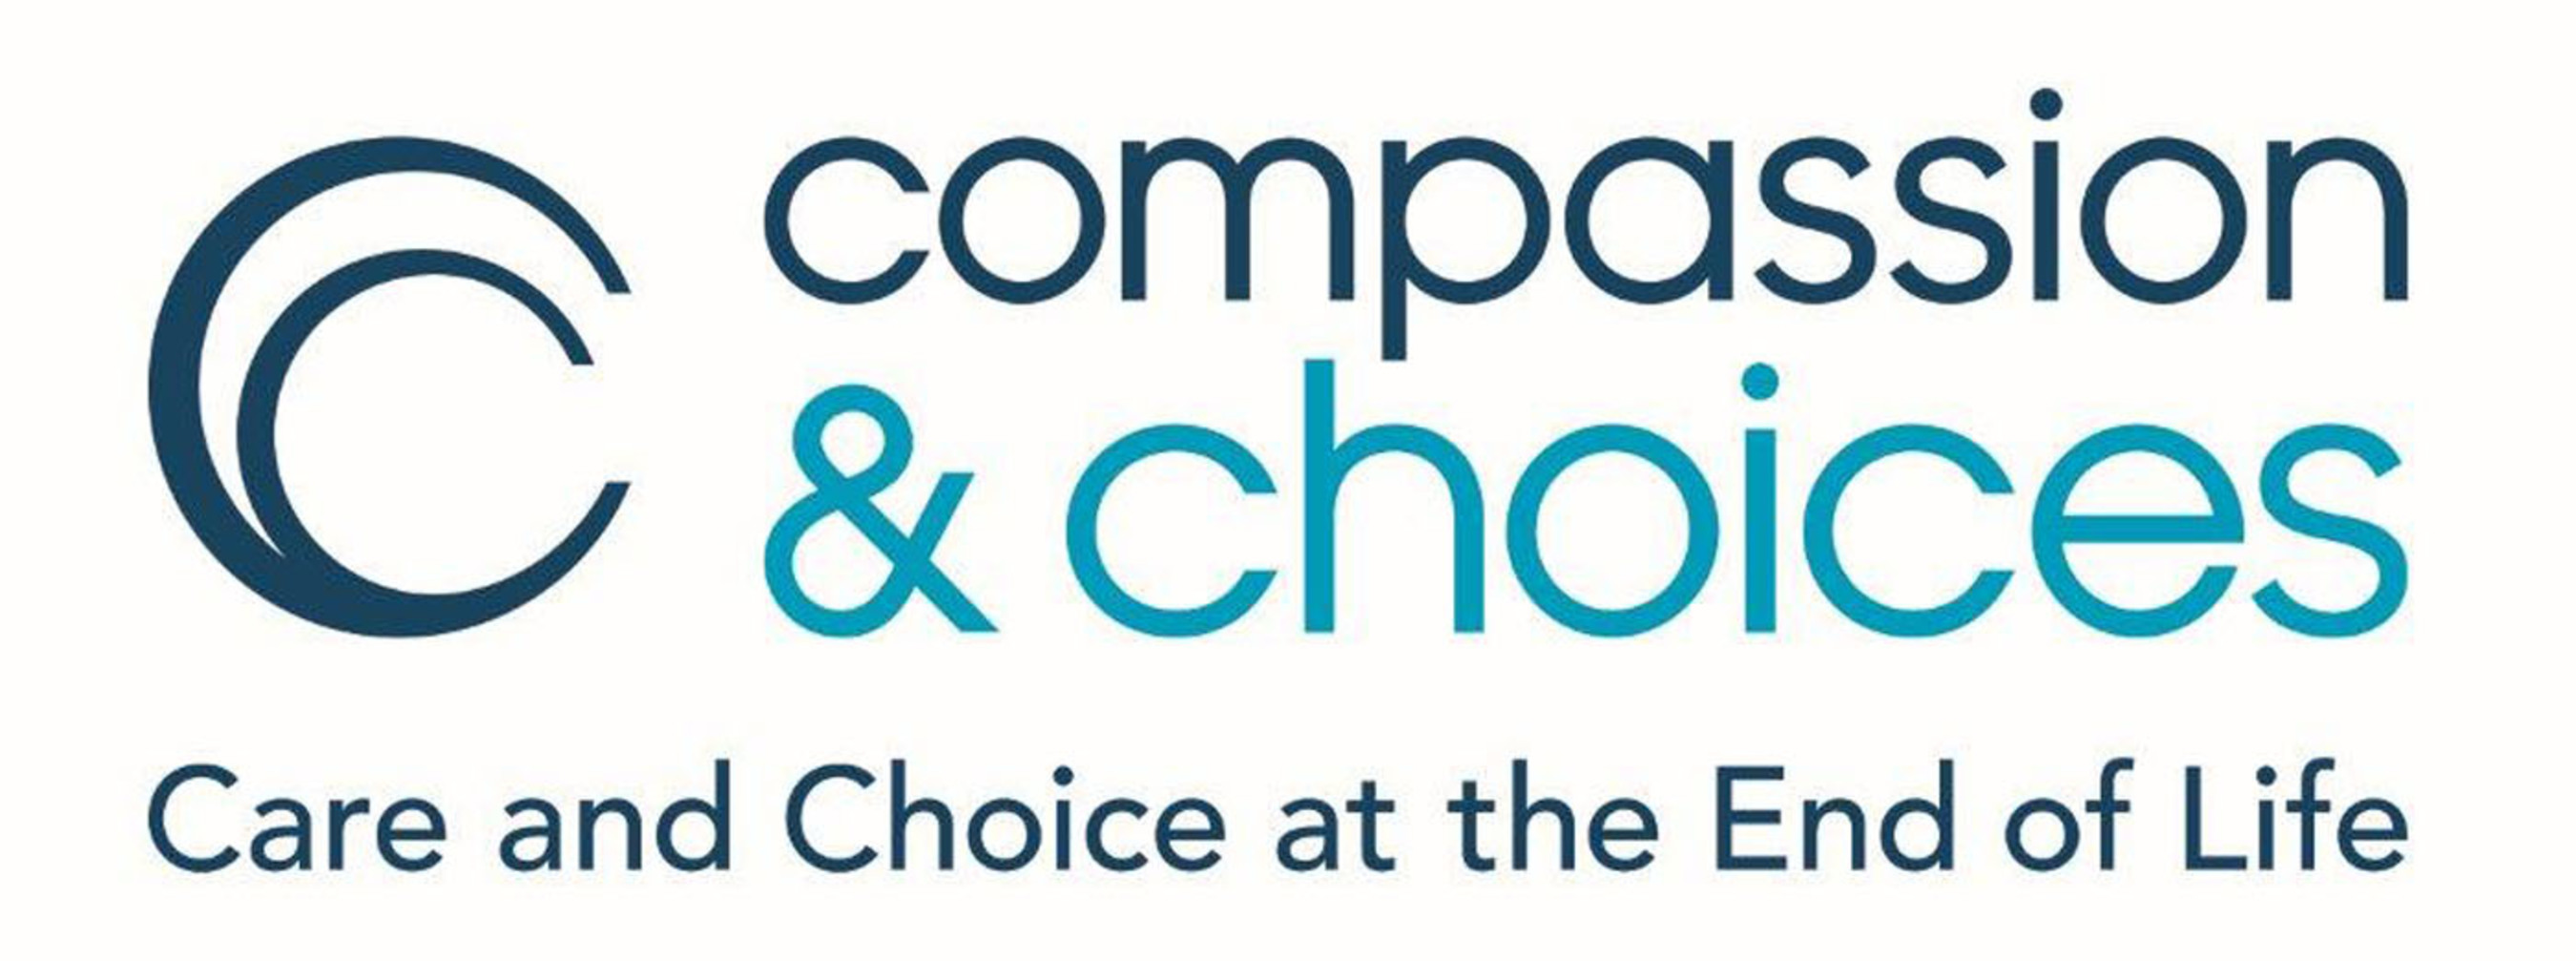 Compassion & Choices logo.